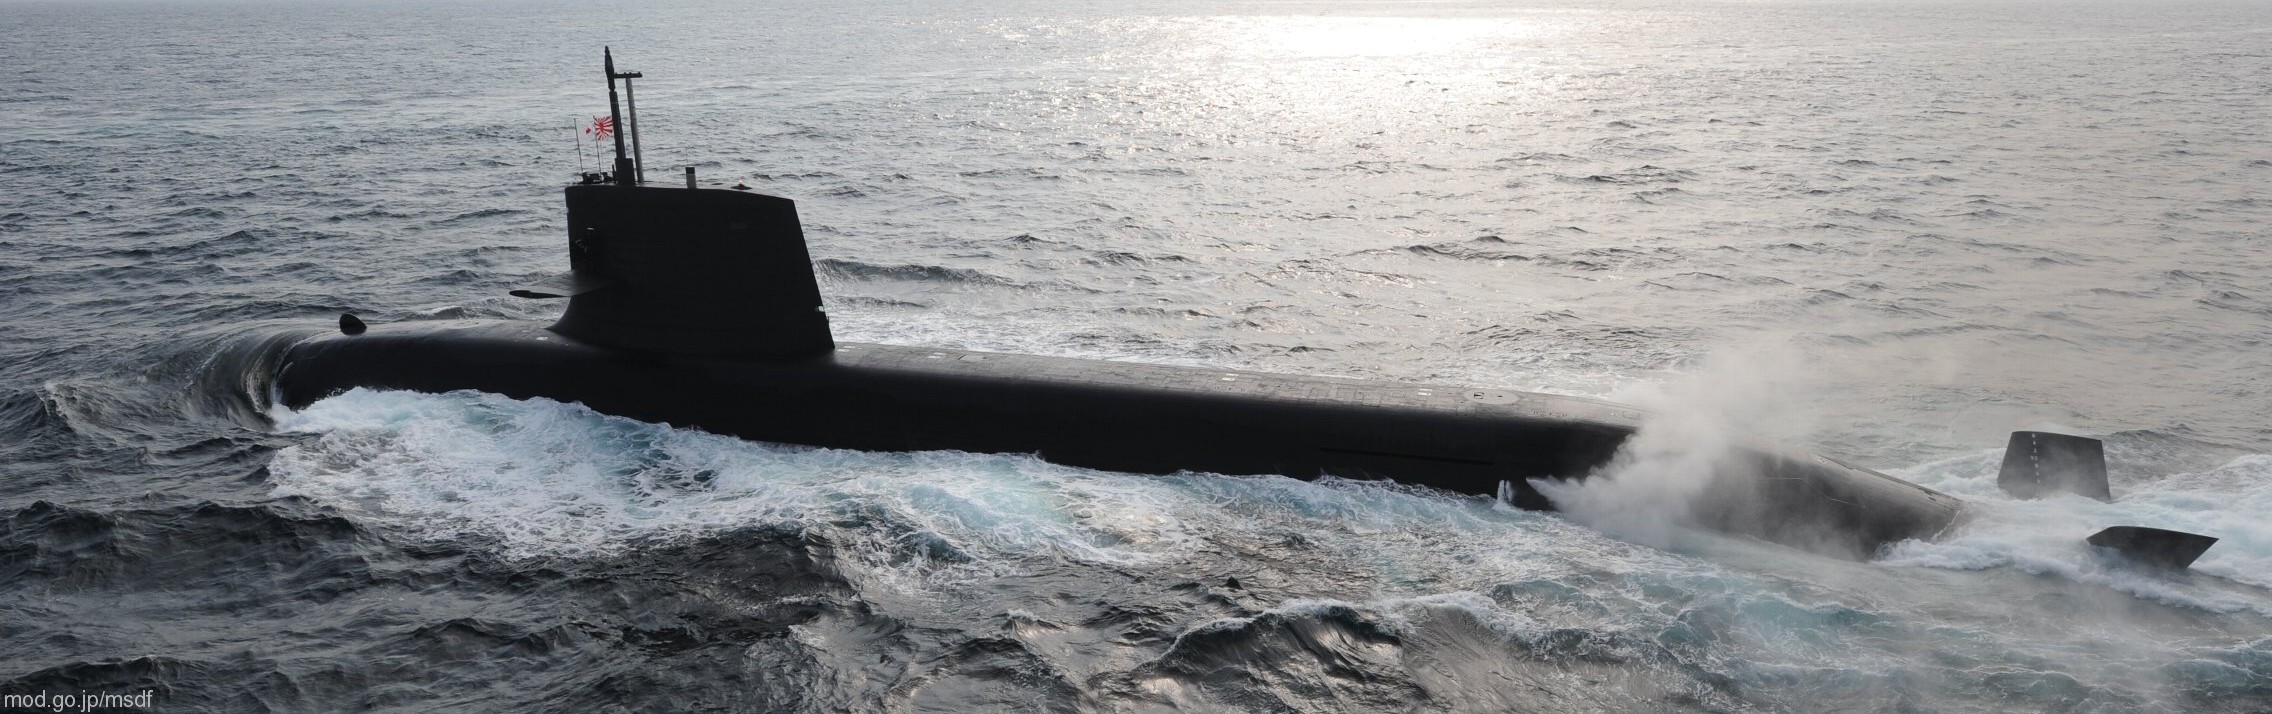 ss-501 js soryu 16ss class attack submarine ssk japan maritime self defense force jmsdf 05